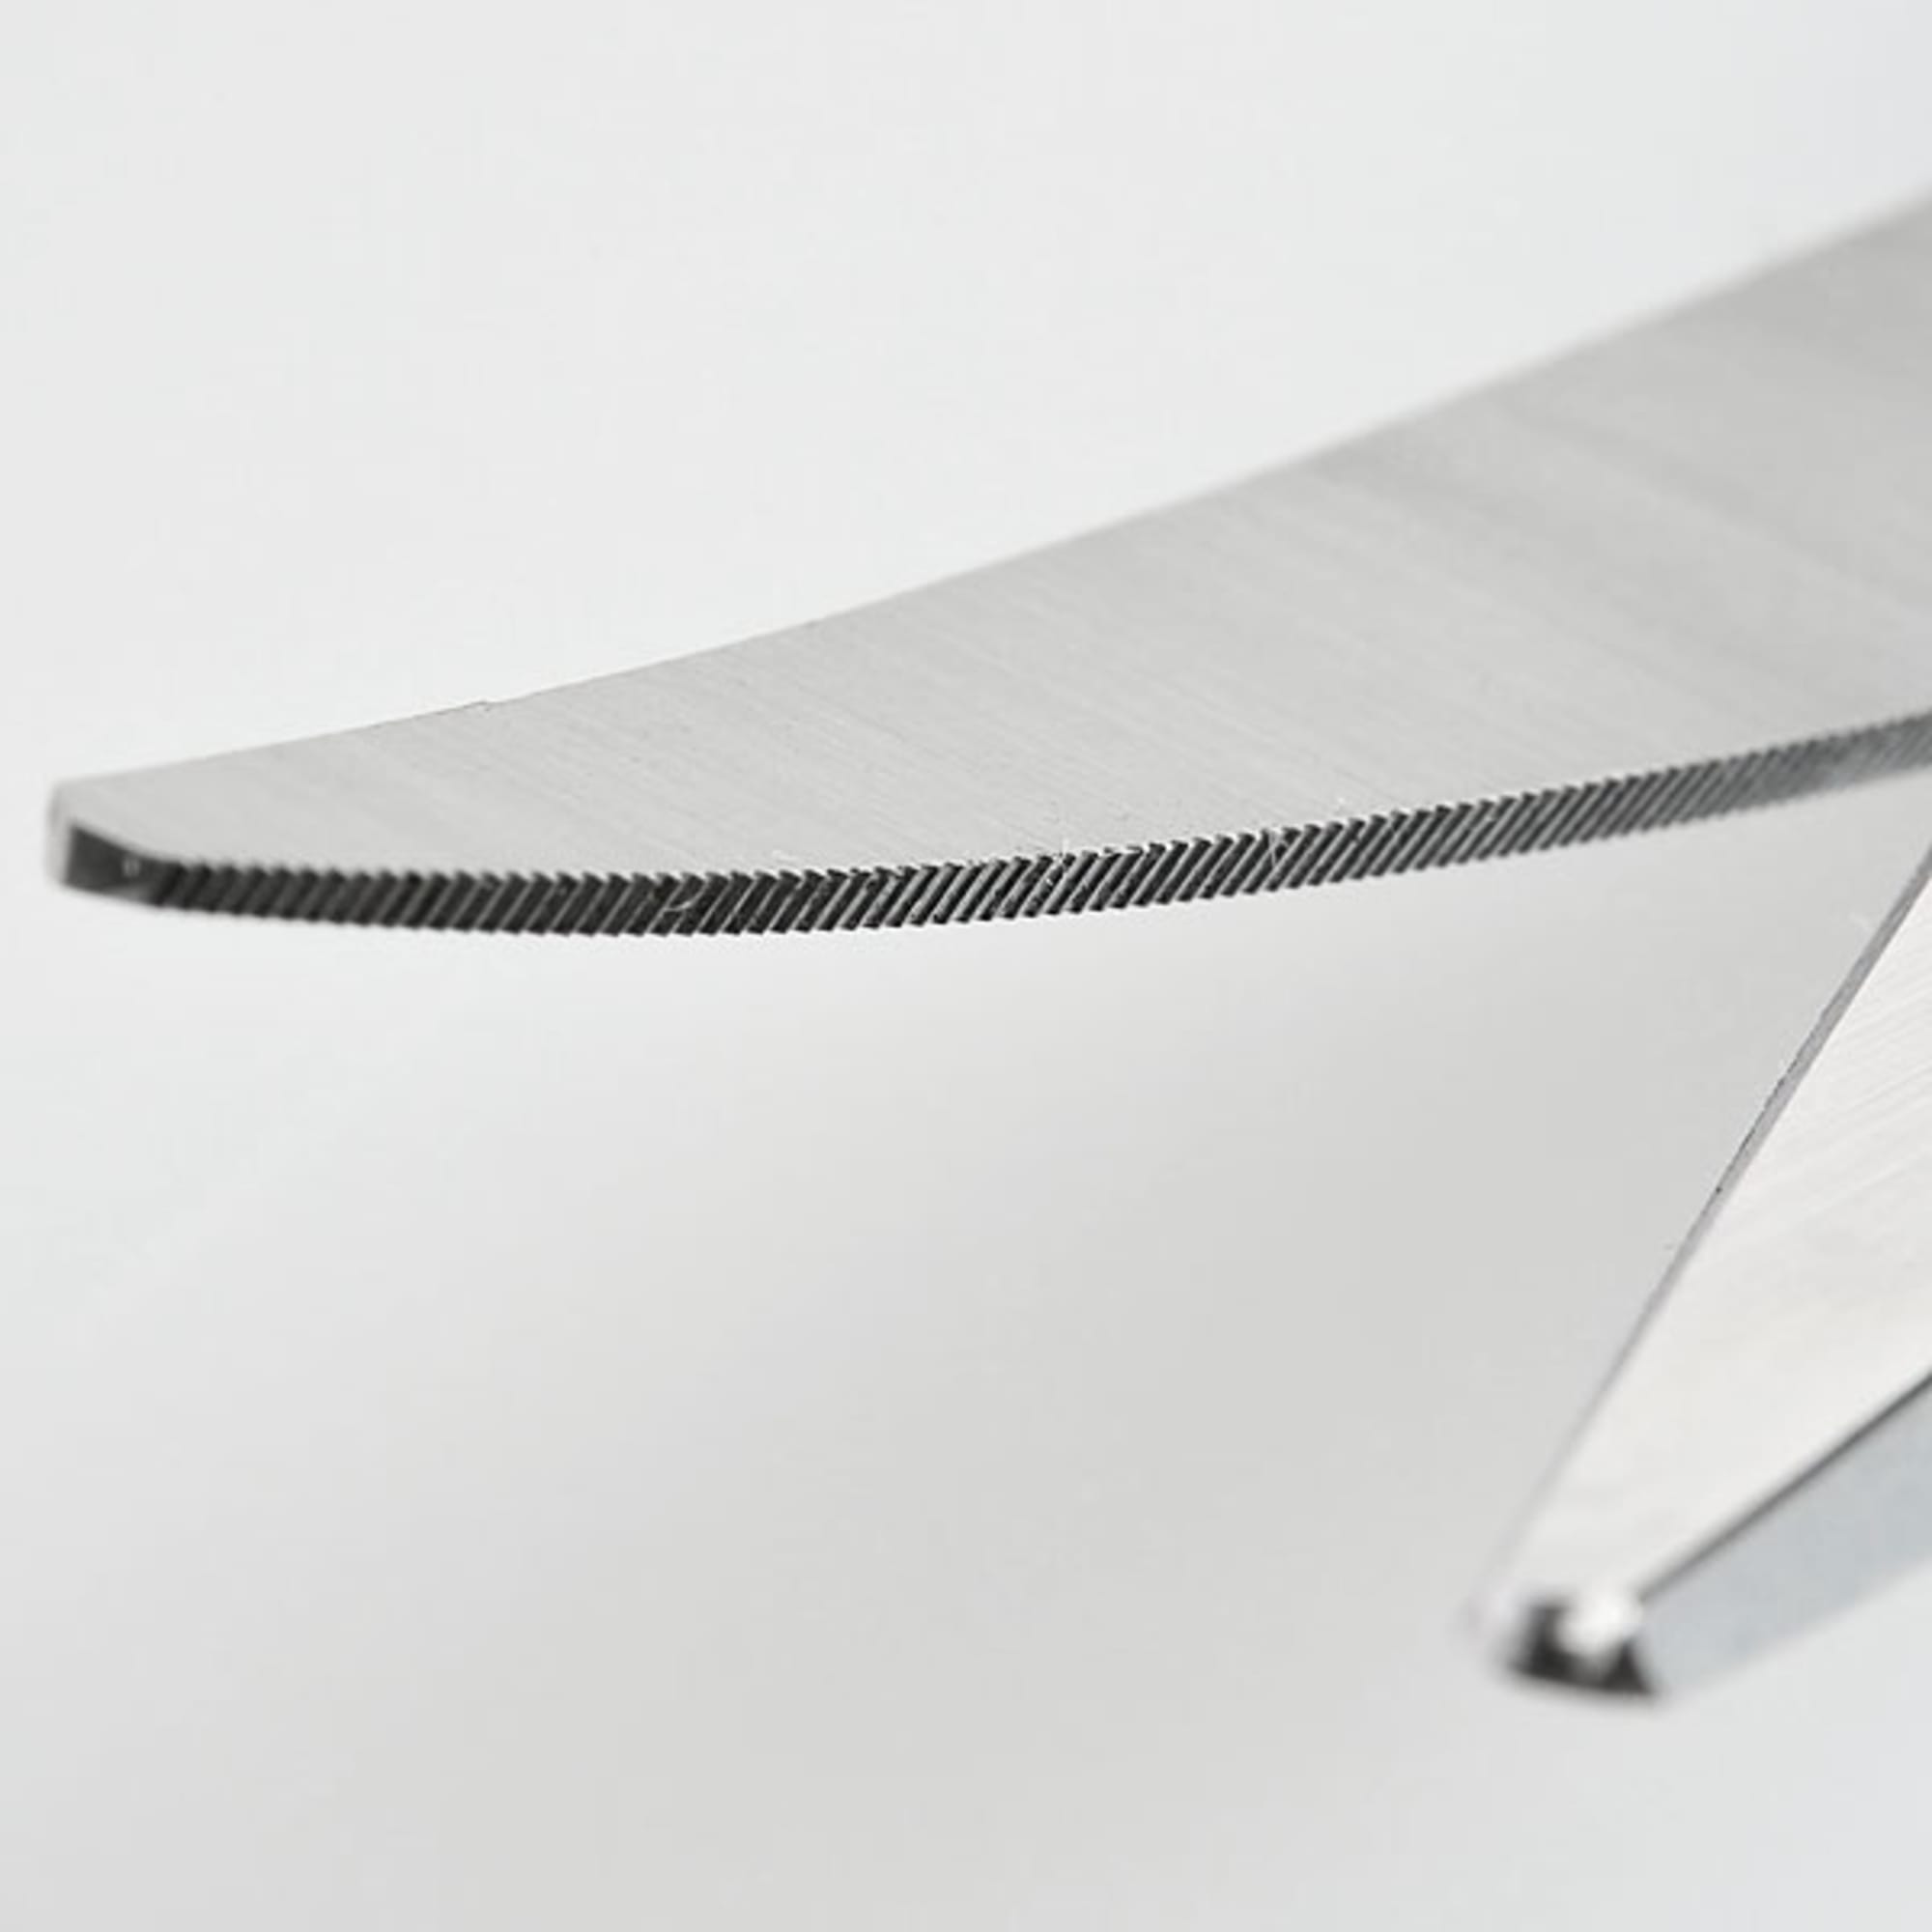 ProcutTec Fabric scissors curved (offset handles), 6" , image 8